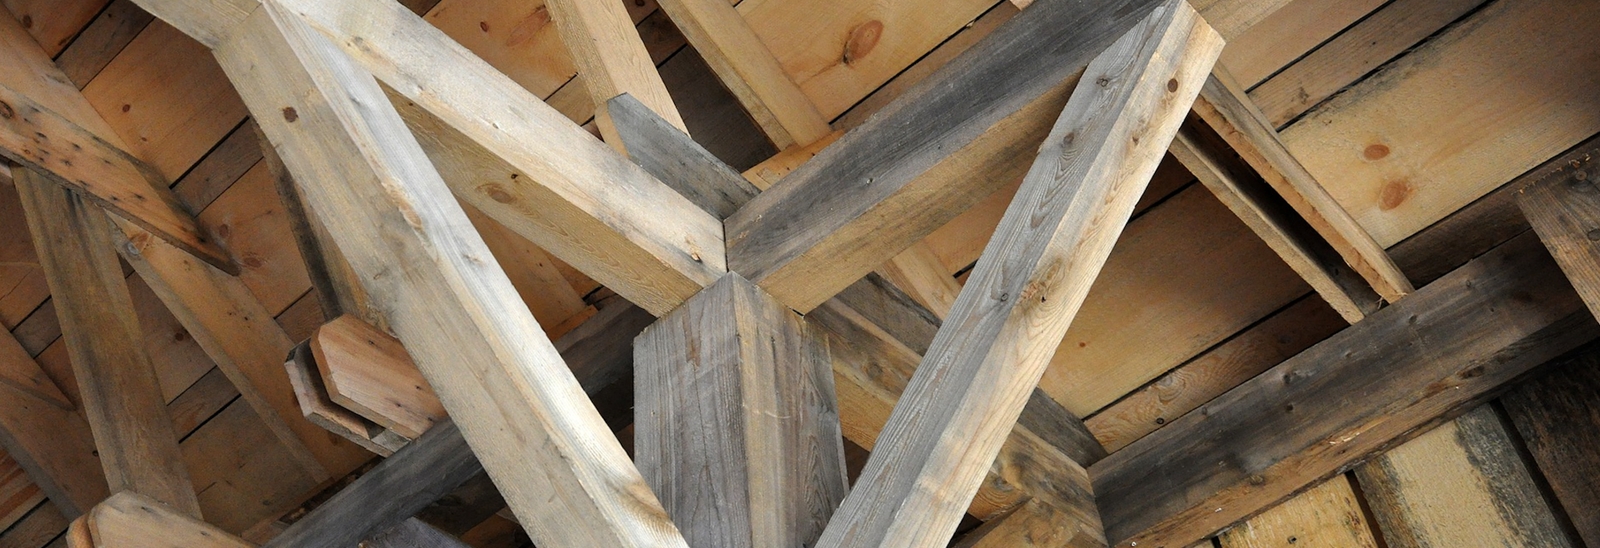 wood frame house meridian trust